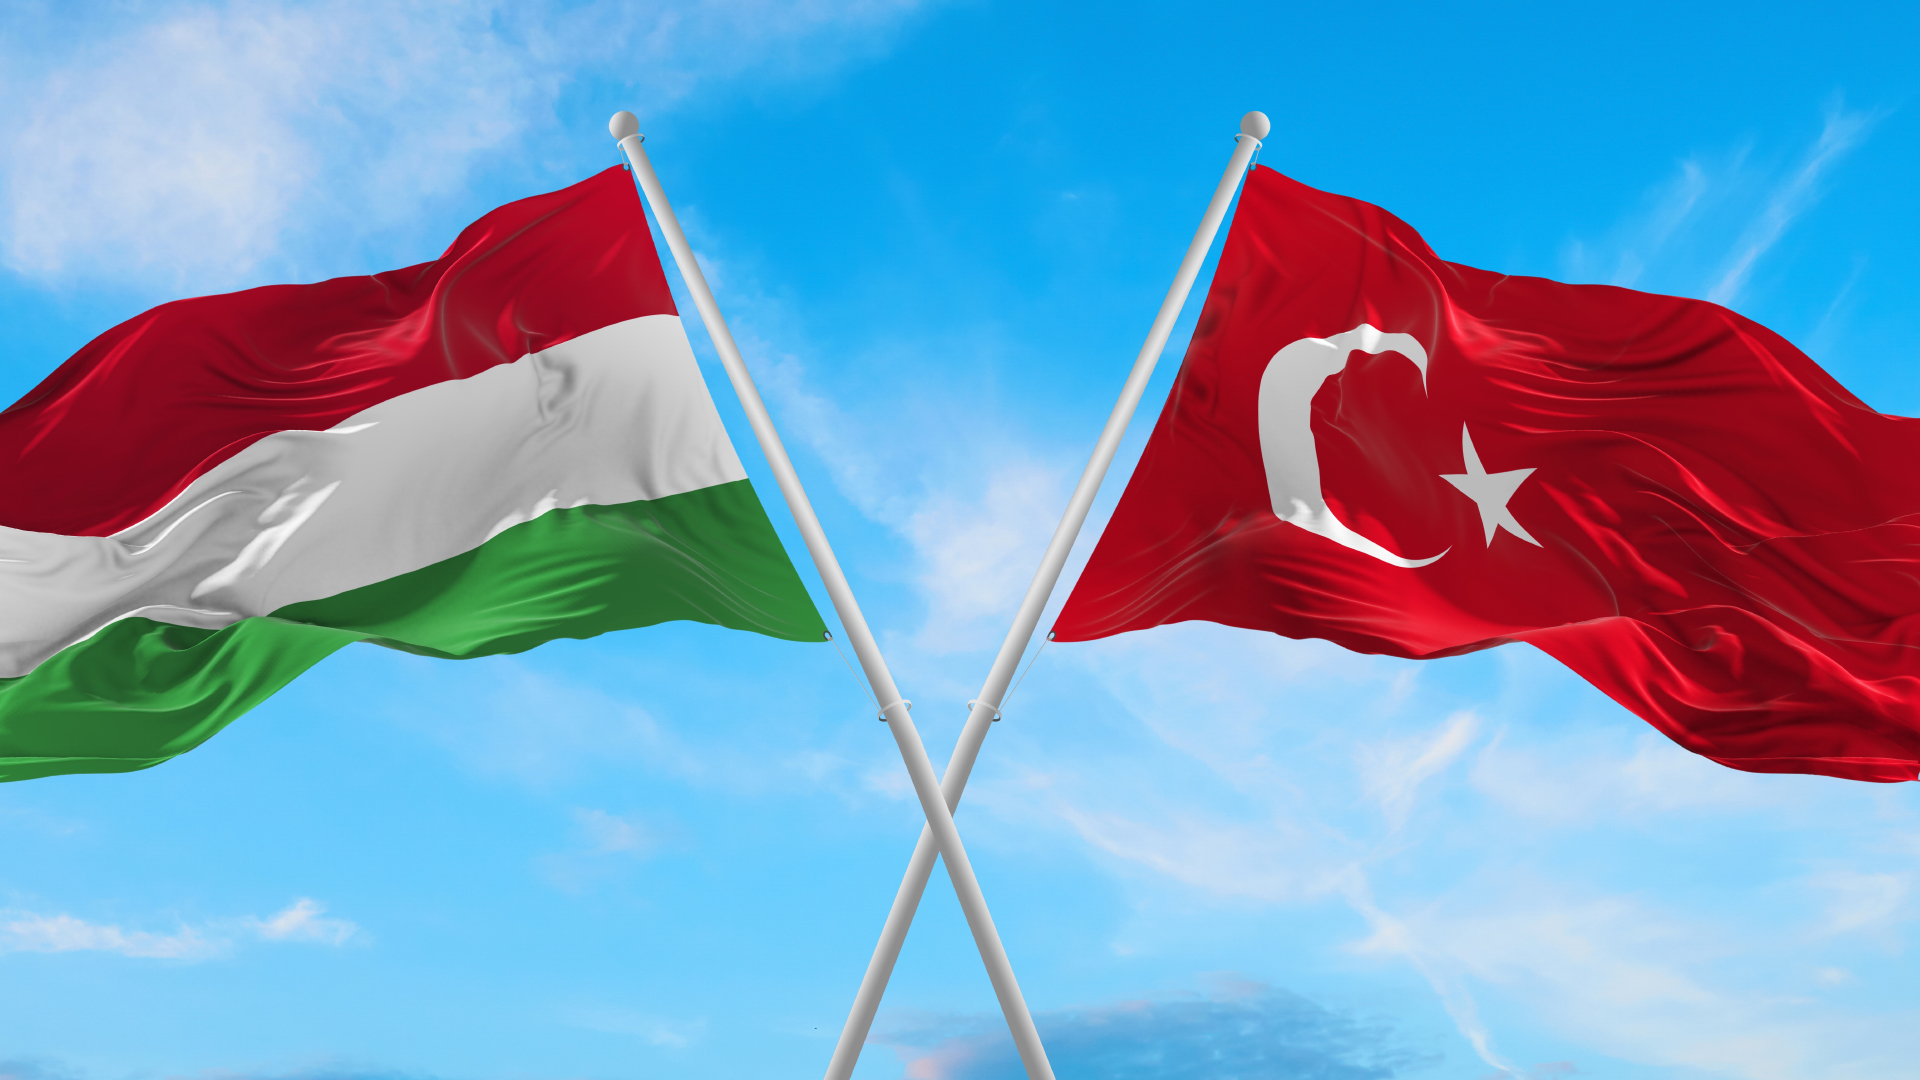 le drapeau Hongrois et le Drapeau Turc